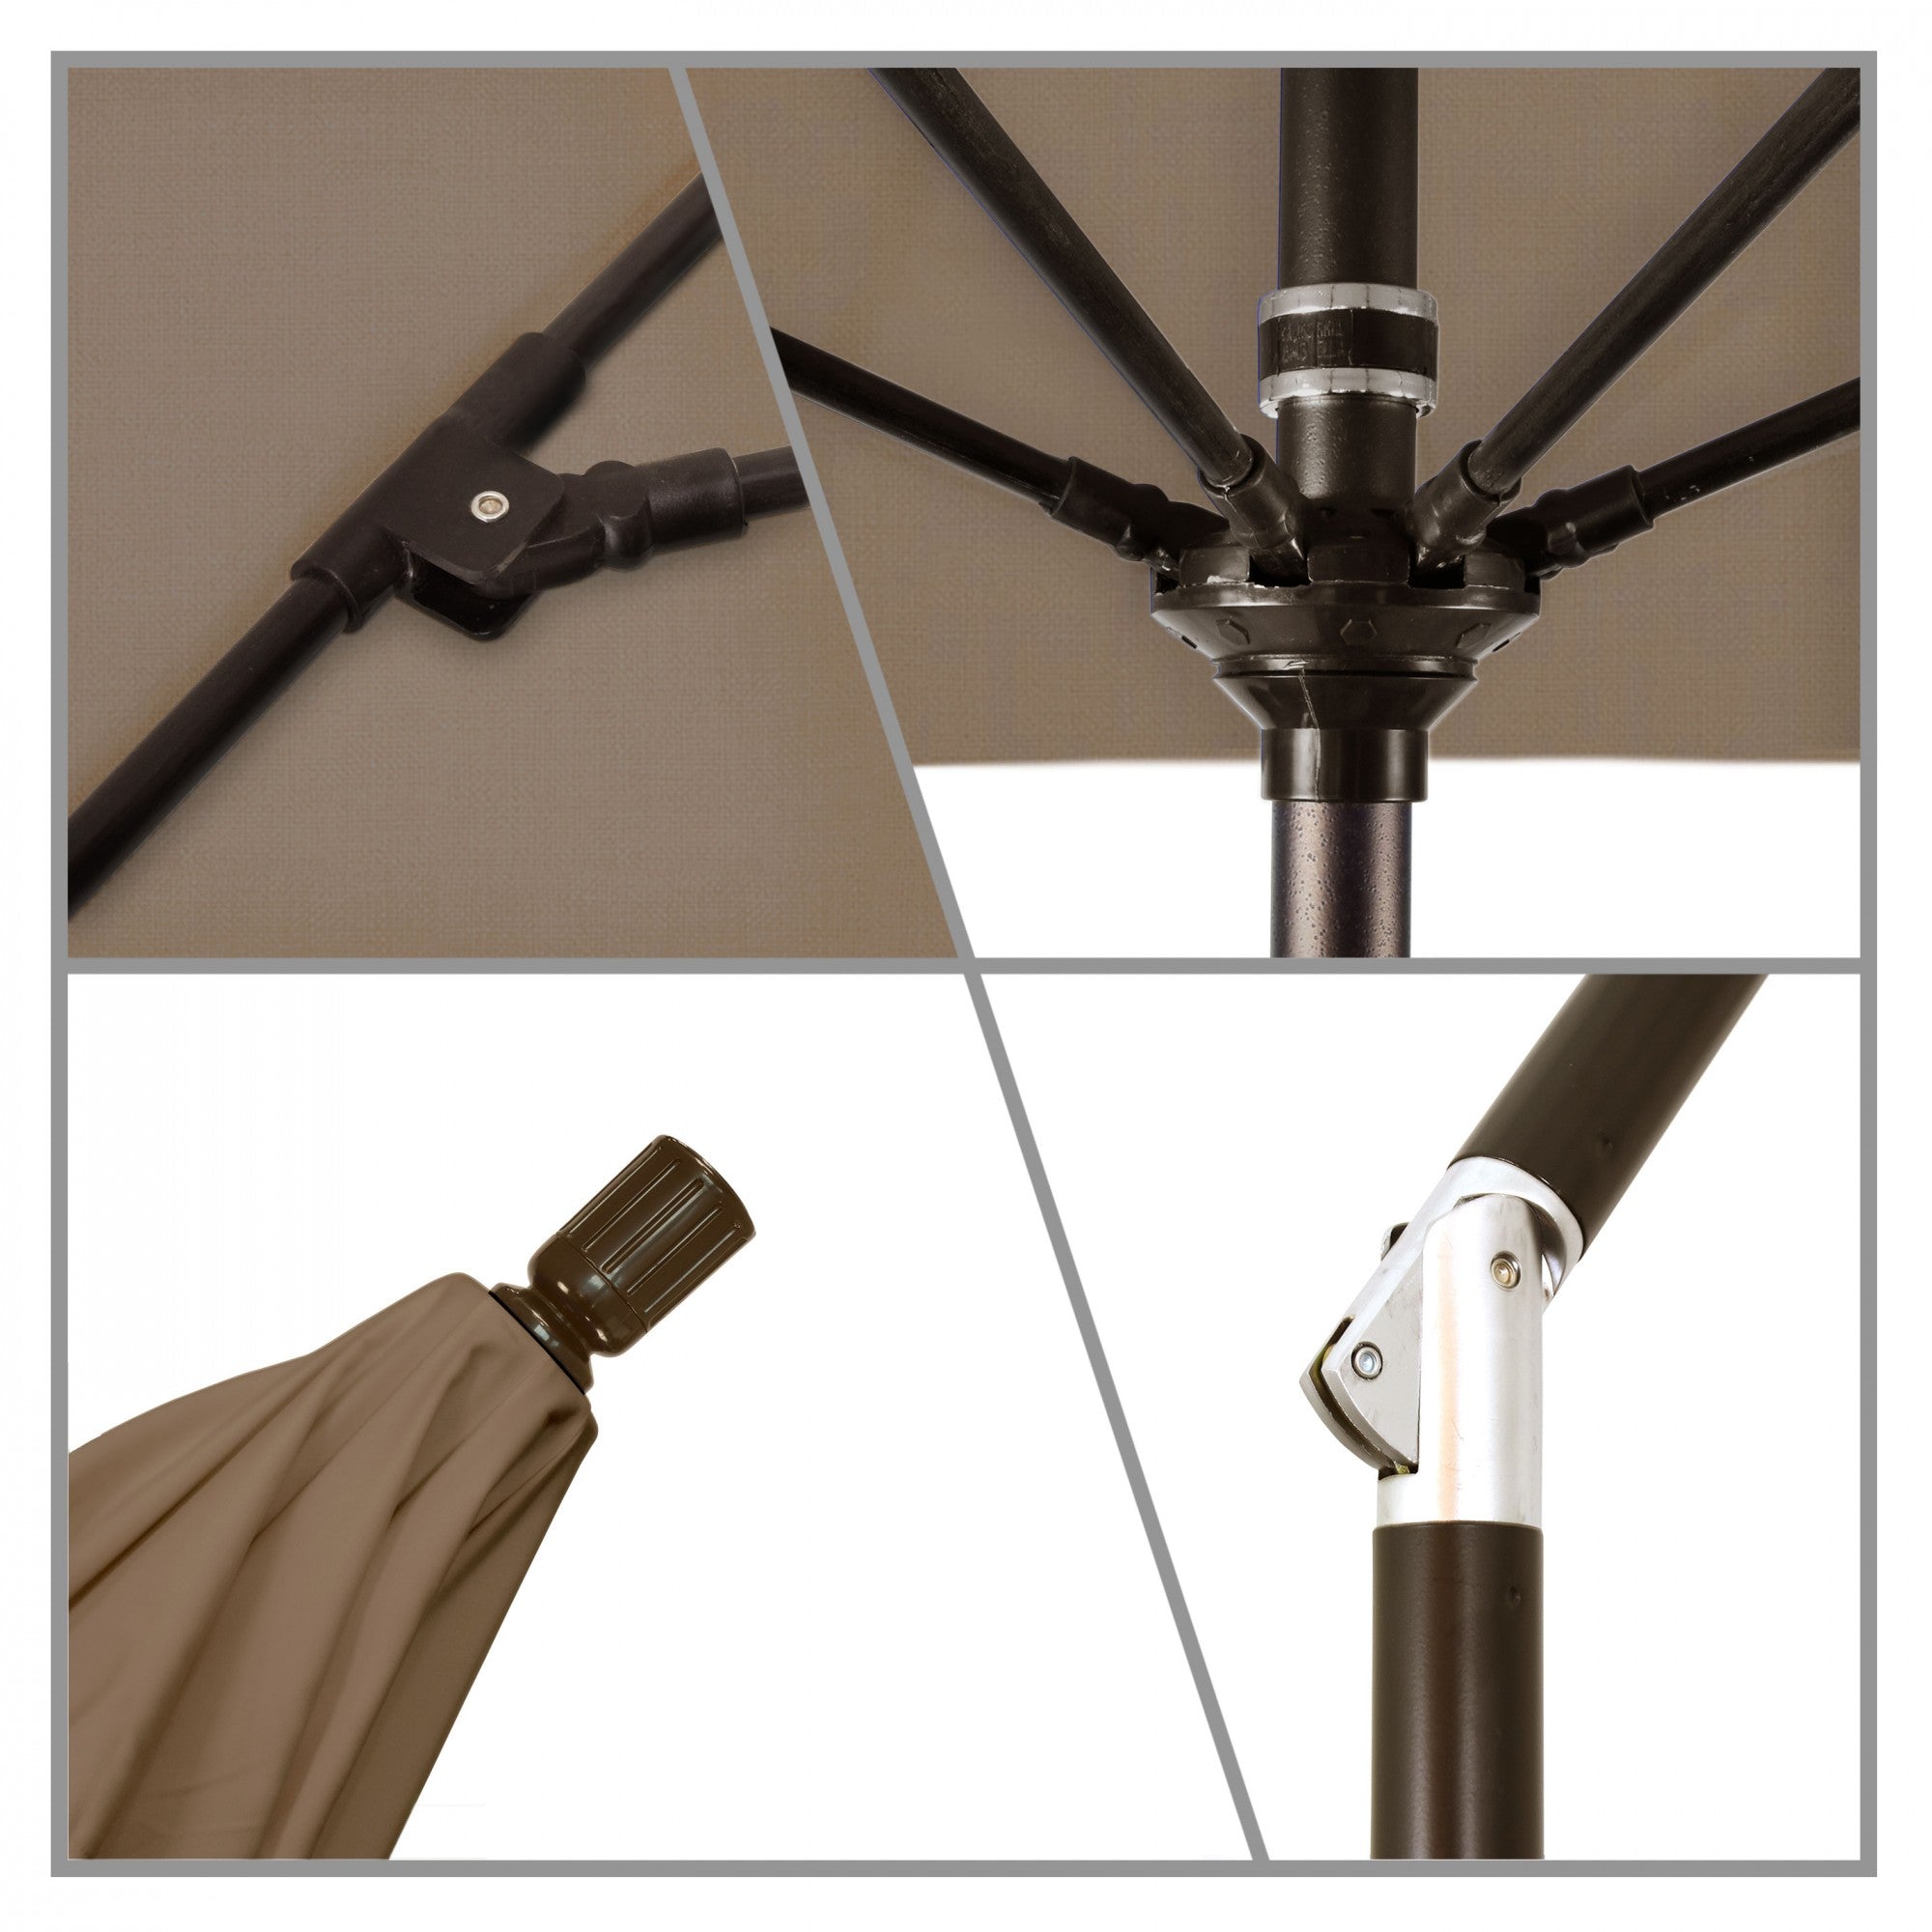 California Umbrella - 9' - Patio Umbrella Umbrella - Aluminum Pole - Cocoa - Sunbrella  - GSCUF908117-5425